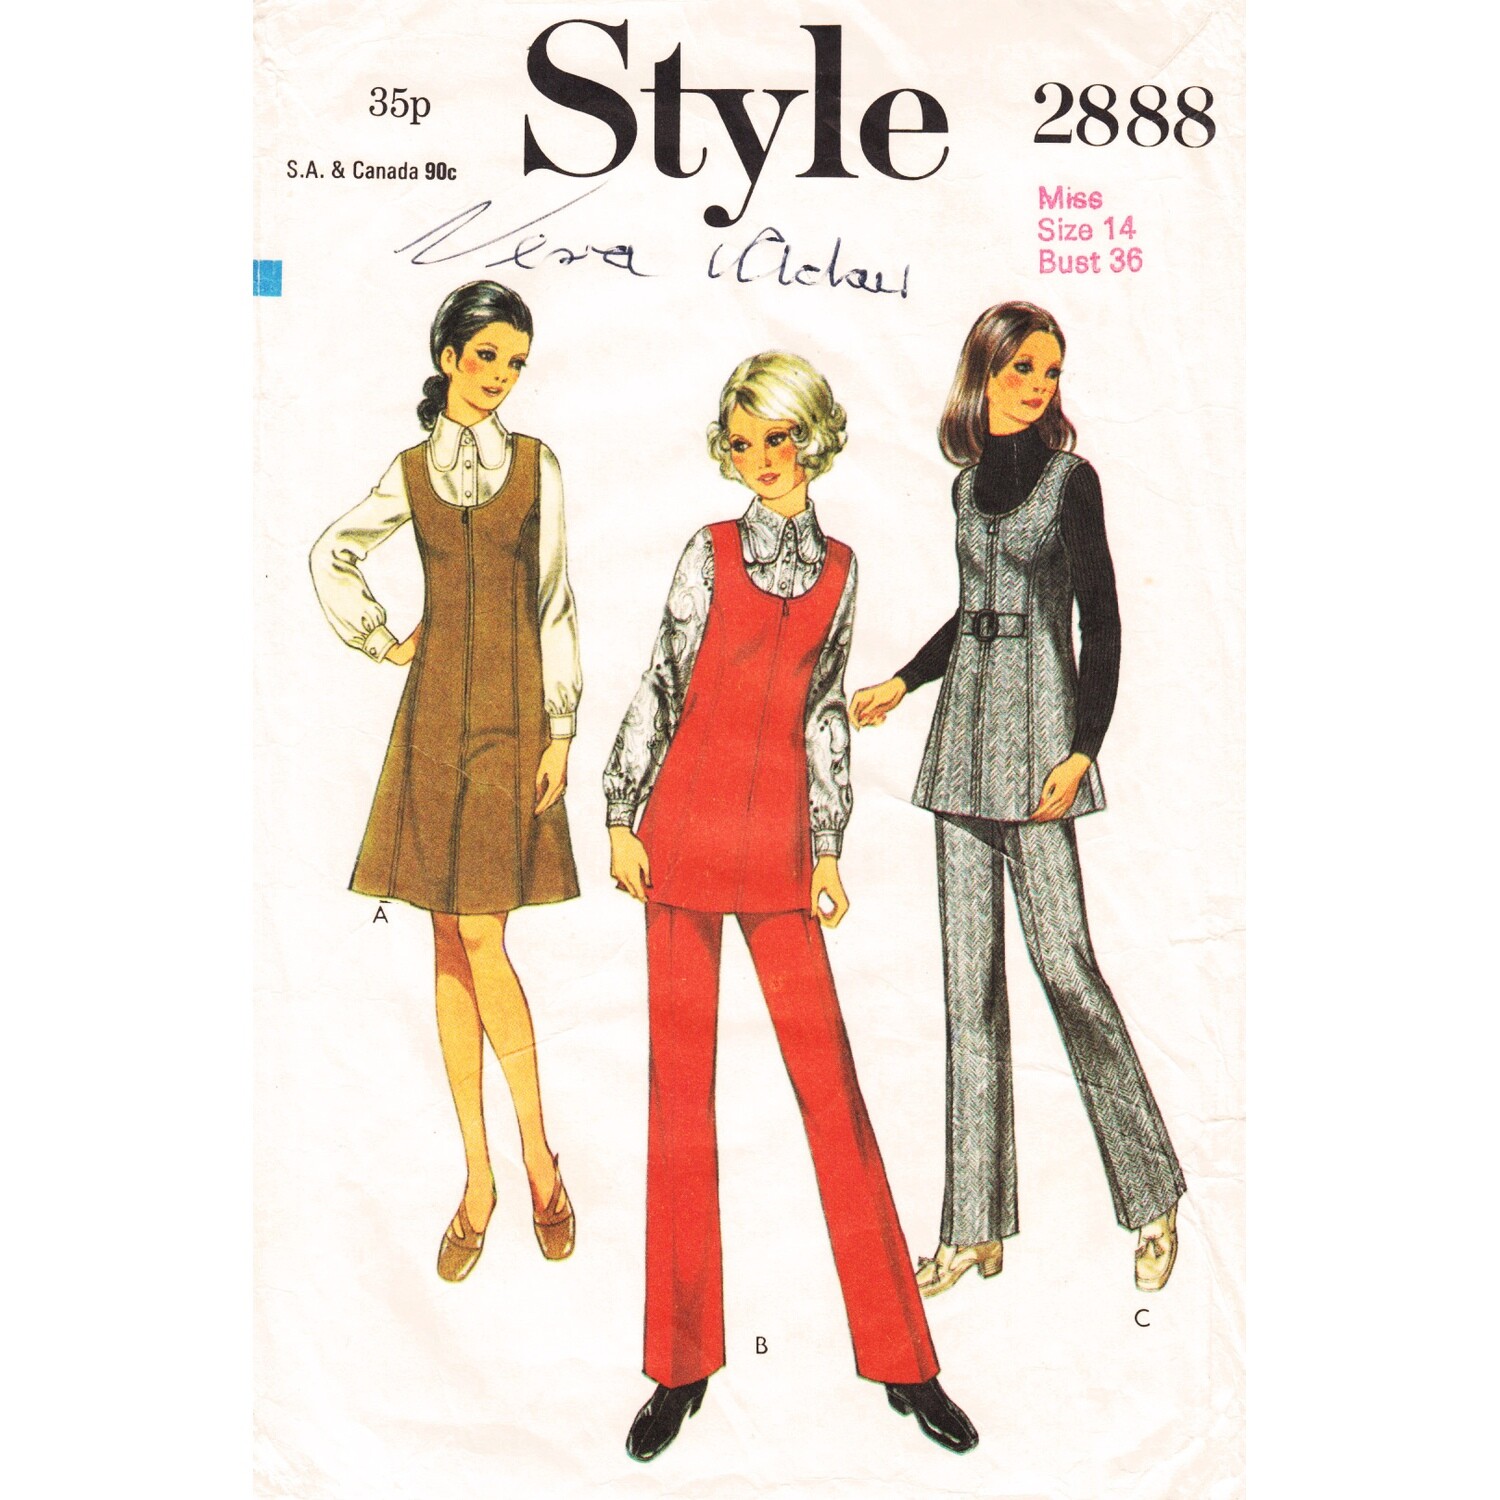 Style 2888 pattern